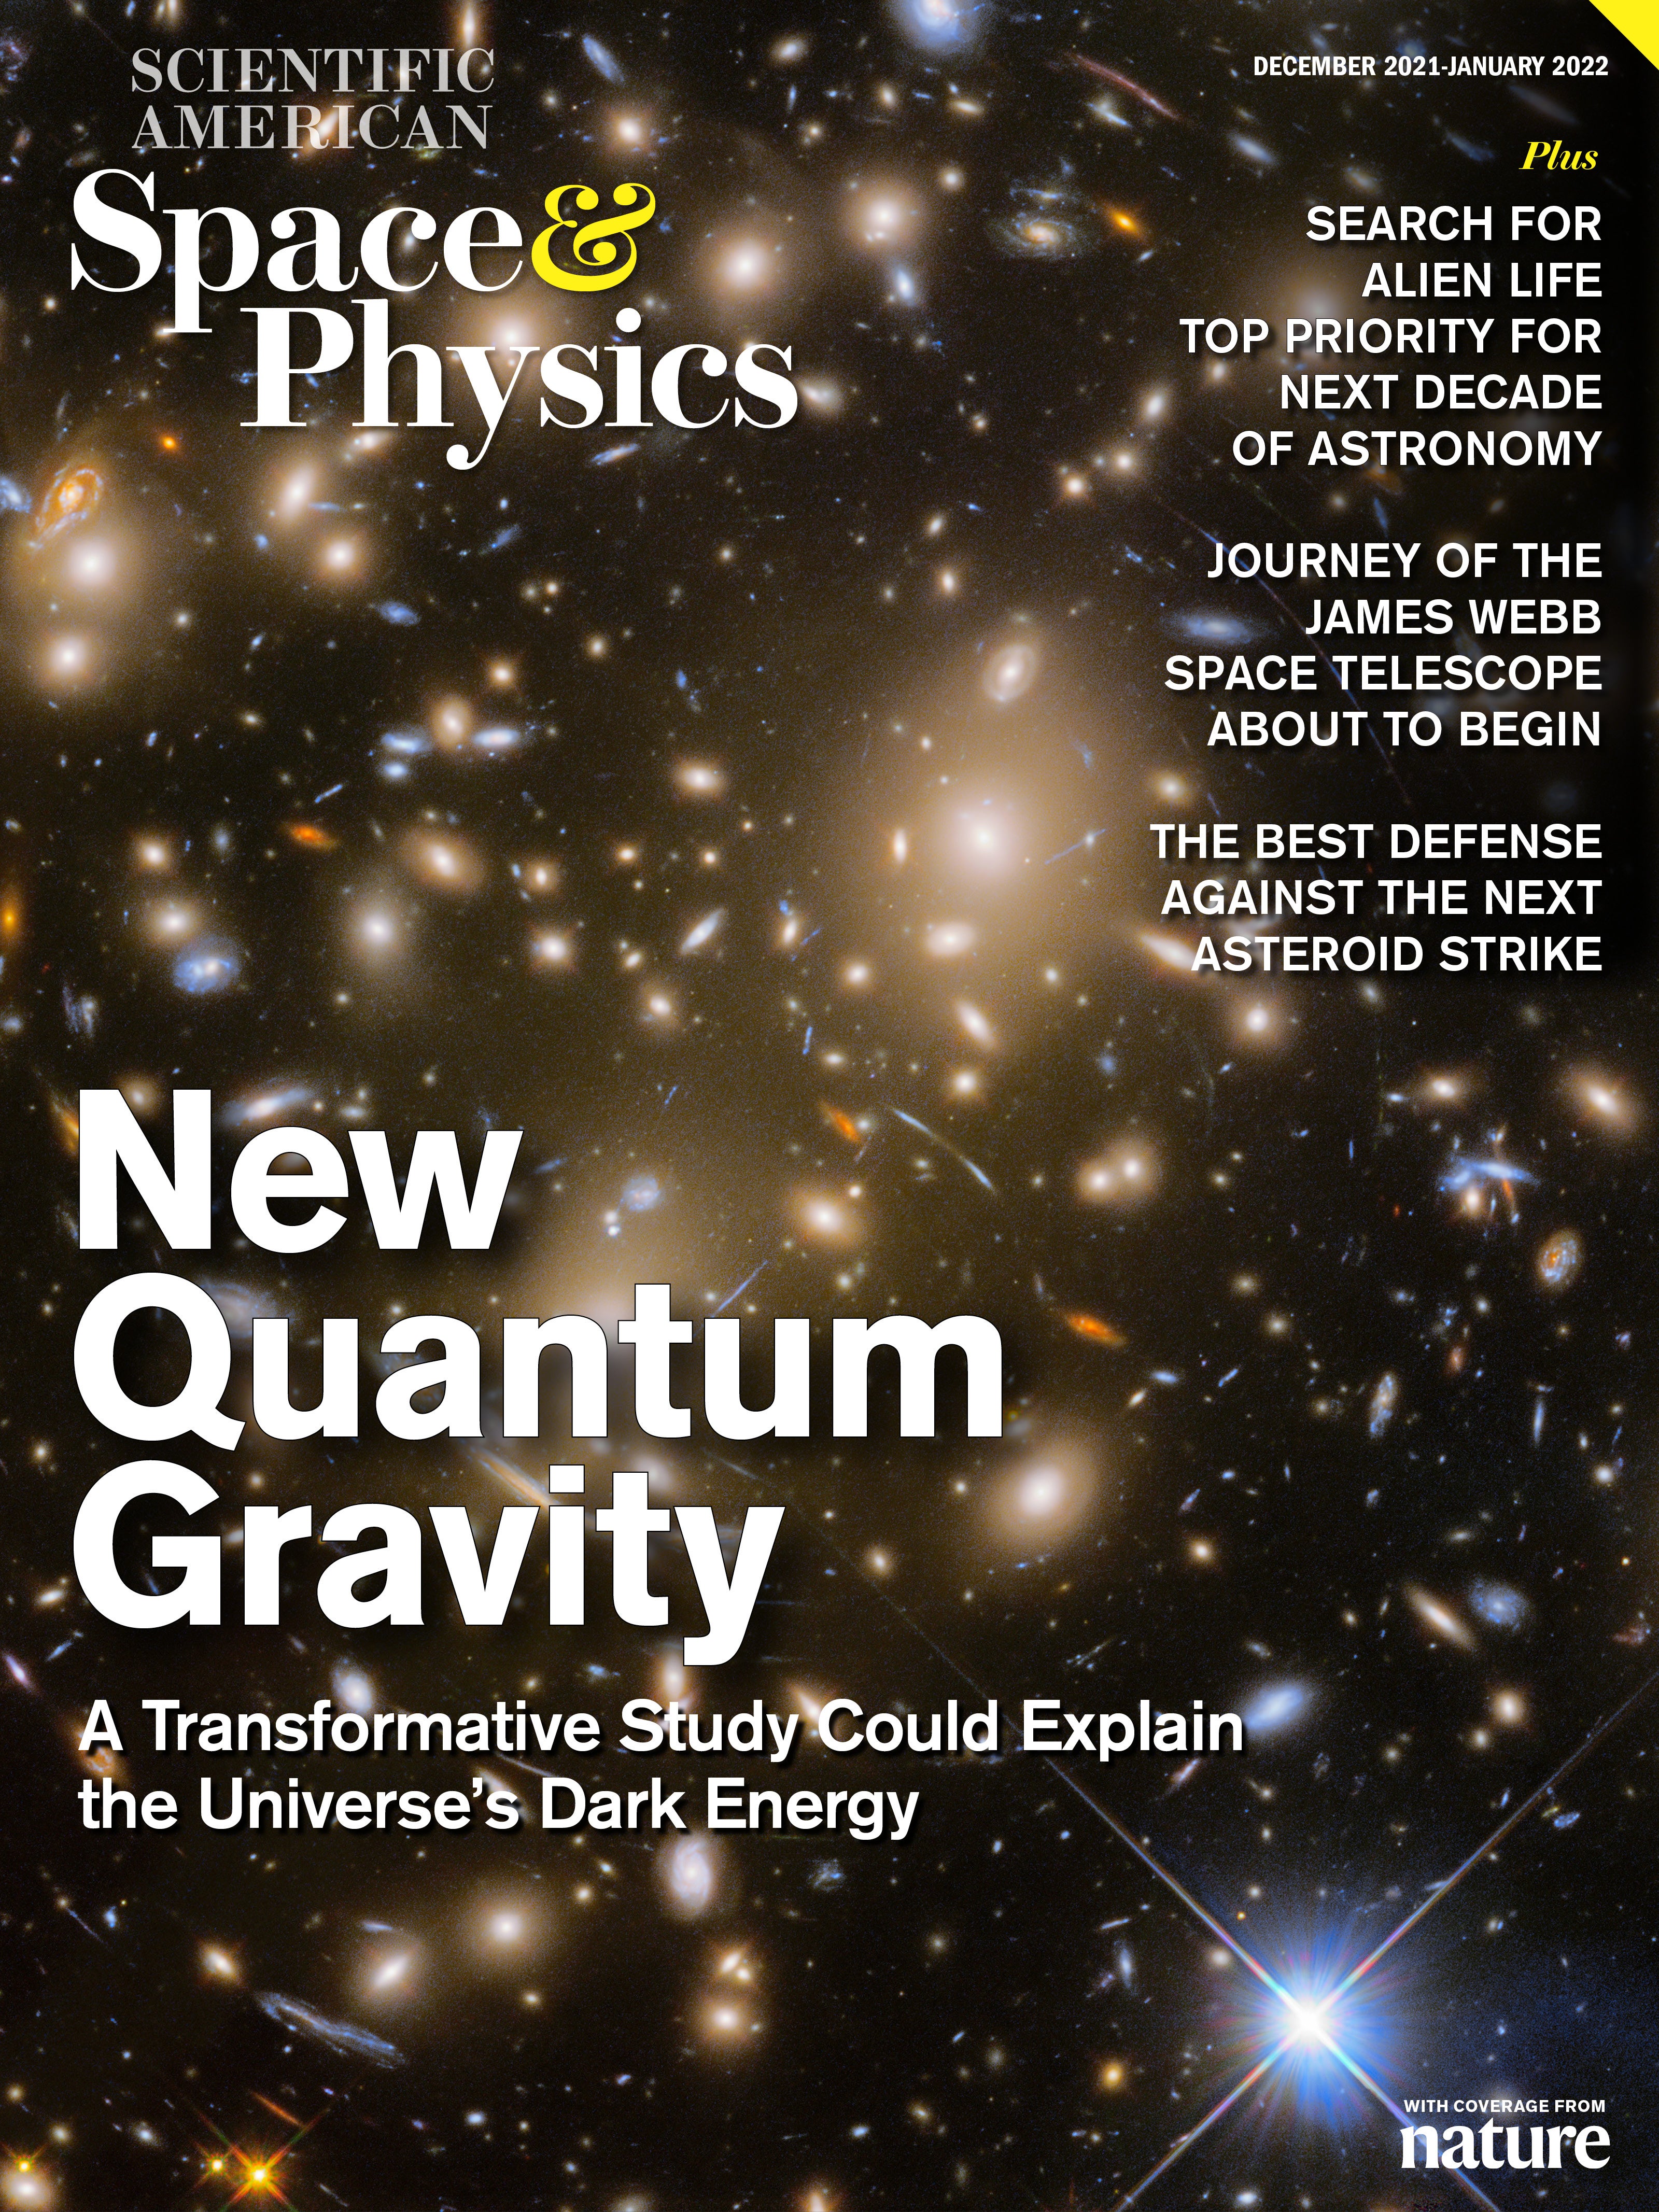 SA Space & Physics Vol 4 Issue 6